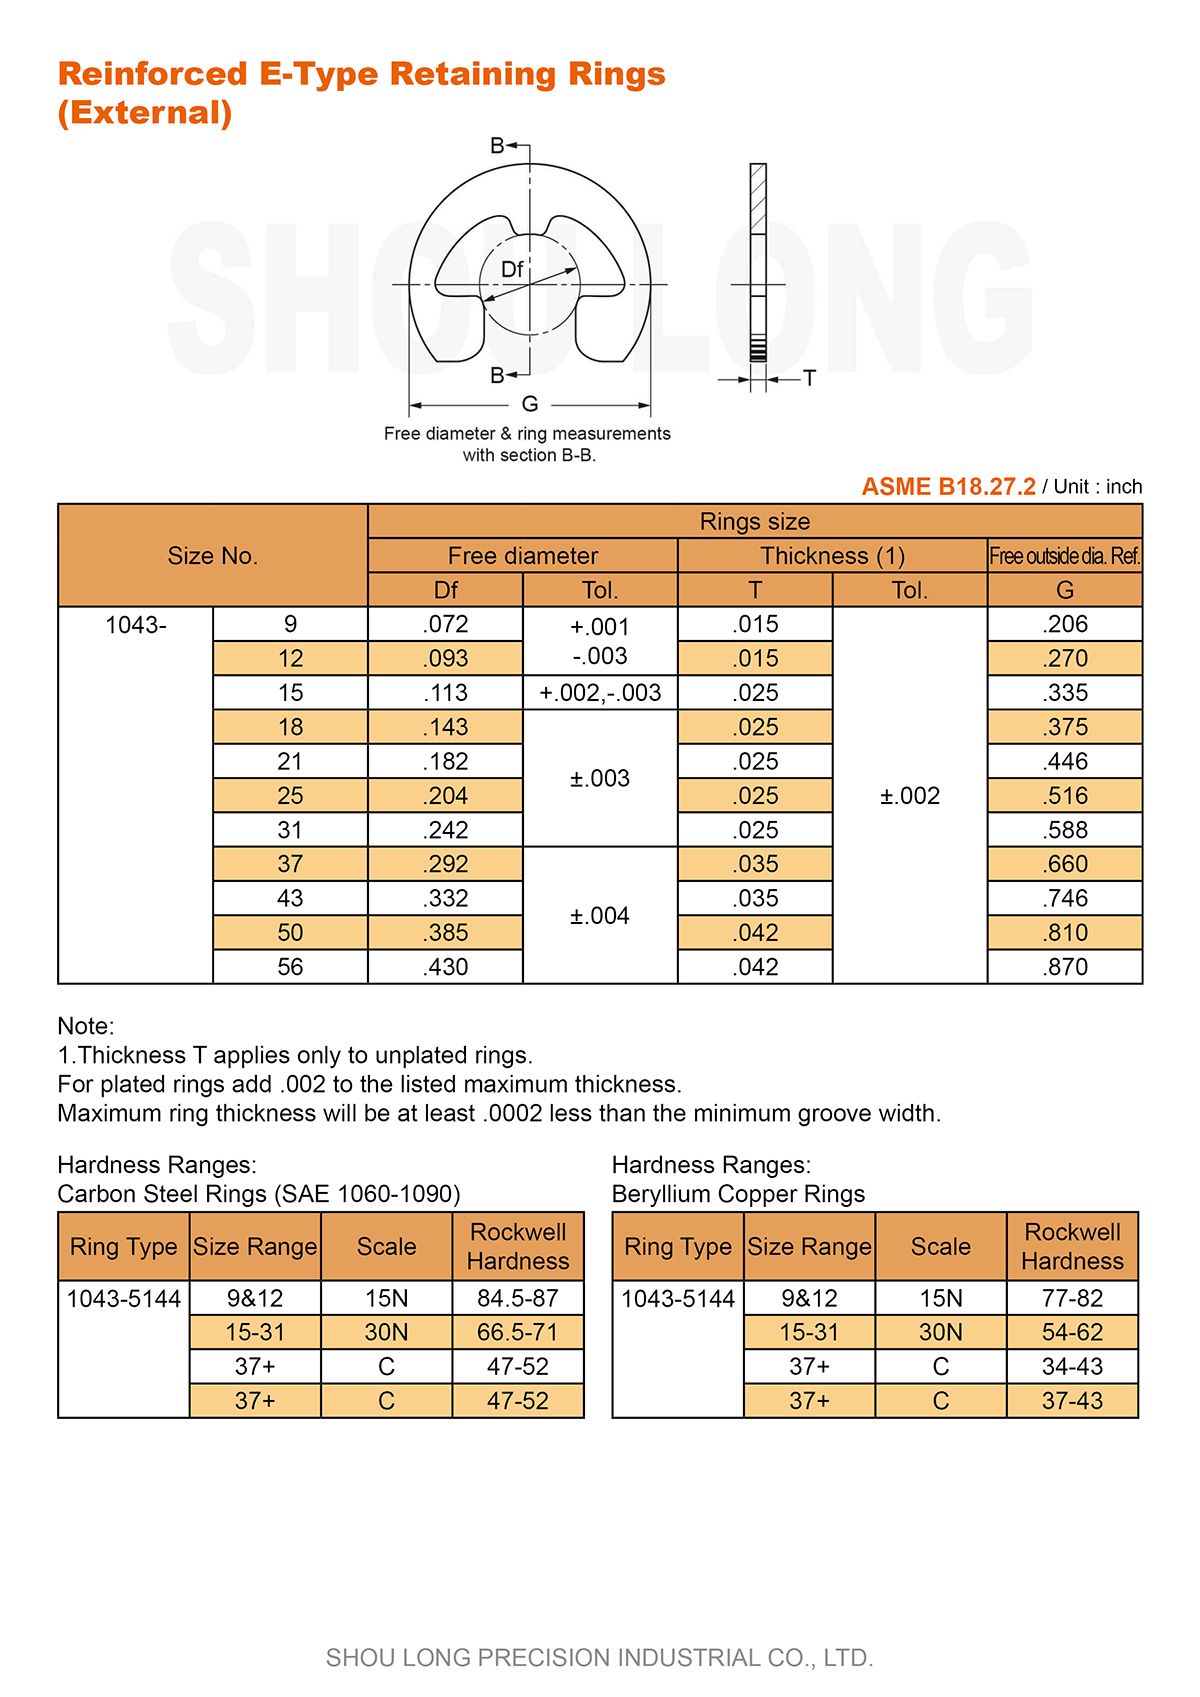 Спецификация дюймовых усиленных крепежных колец типа E для вала ASME/ANSI B18.27.2